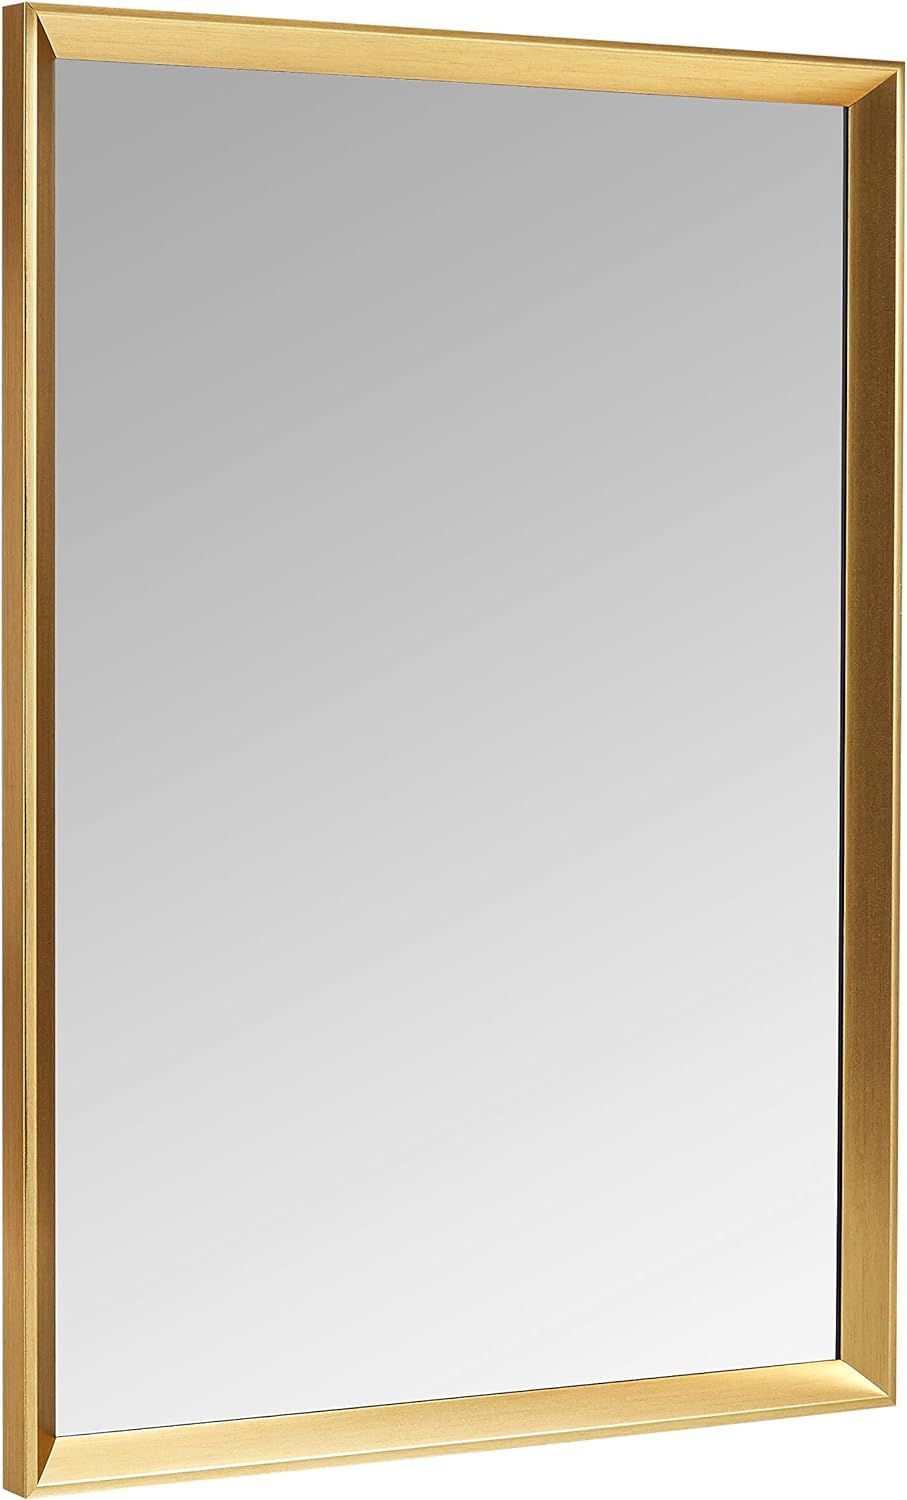 Amazon Basics Rectangular Wall Mirror 20" x 28", Peaked Trim, Brass | Amazon (US)